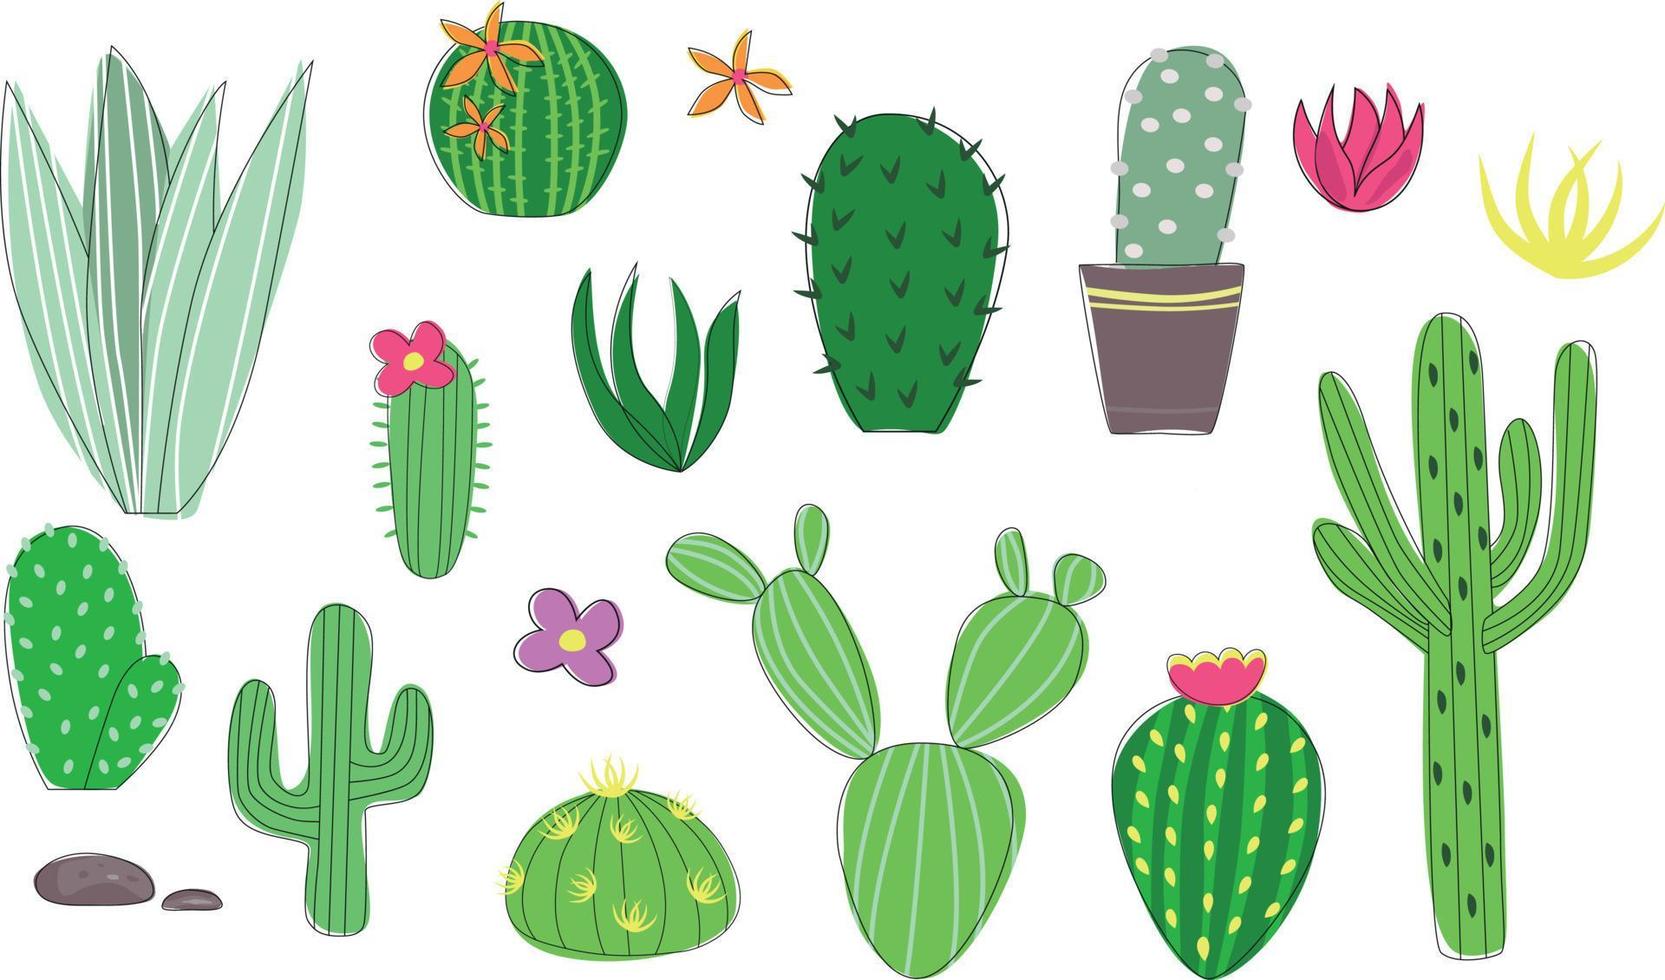 messicano cactus impostare, mano disegnato scarabocchio succulente, minimalismo cartone animato stile, verde fioritura cactus vettore